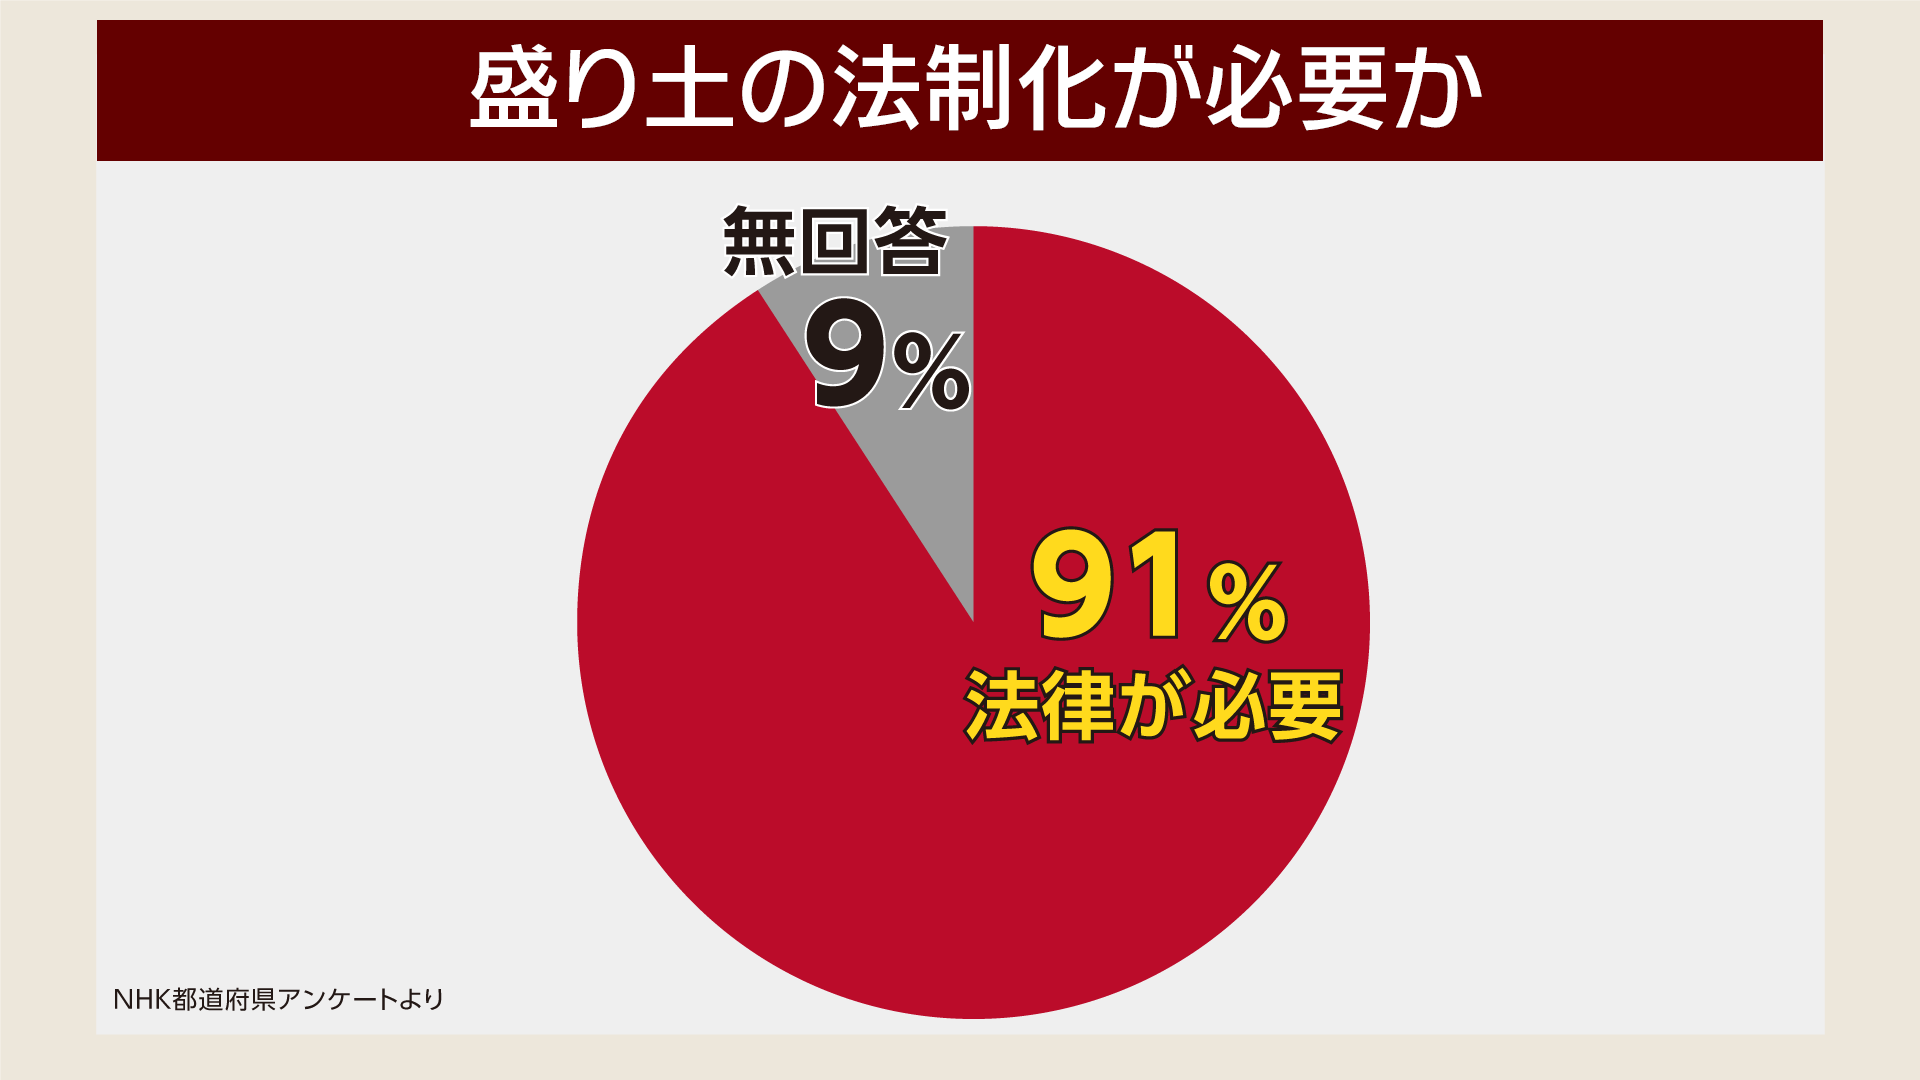 NHKが４７都道府県に行ったアンケートでは、９割以上が「国の法律が必要だ」と回答。残りの１割は無回答だった